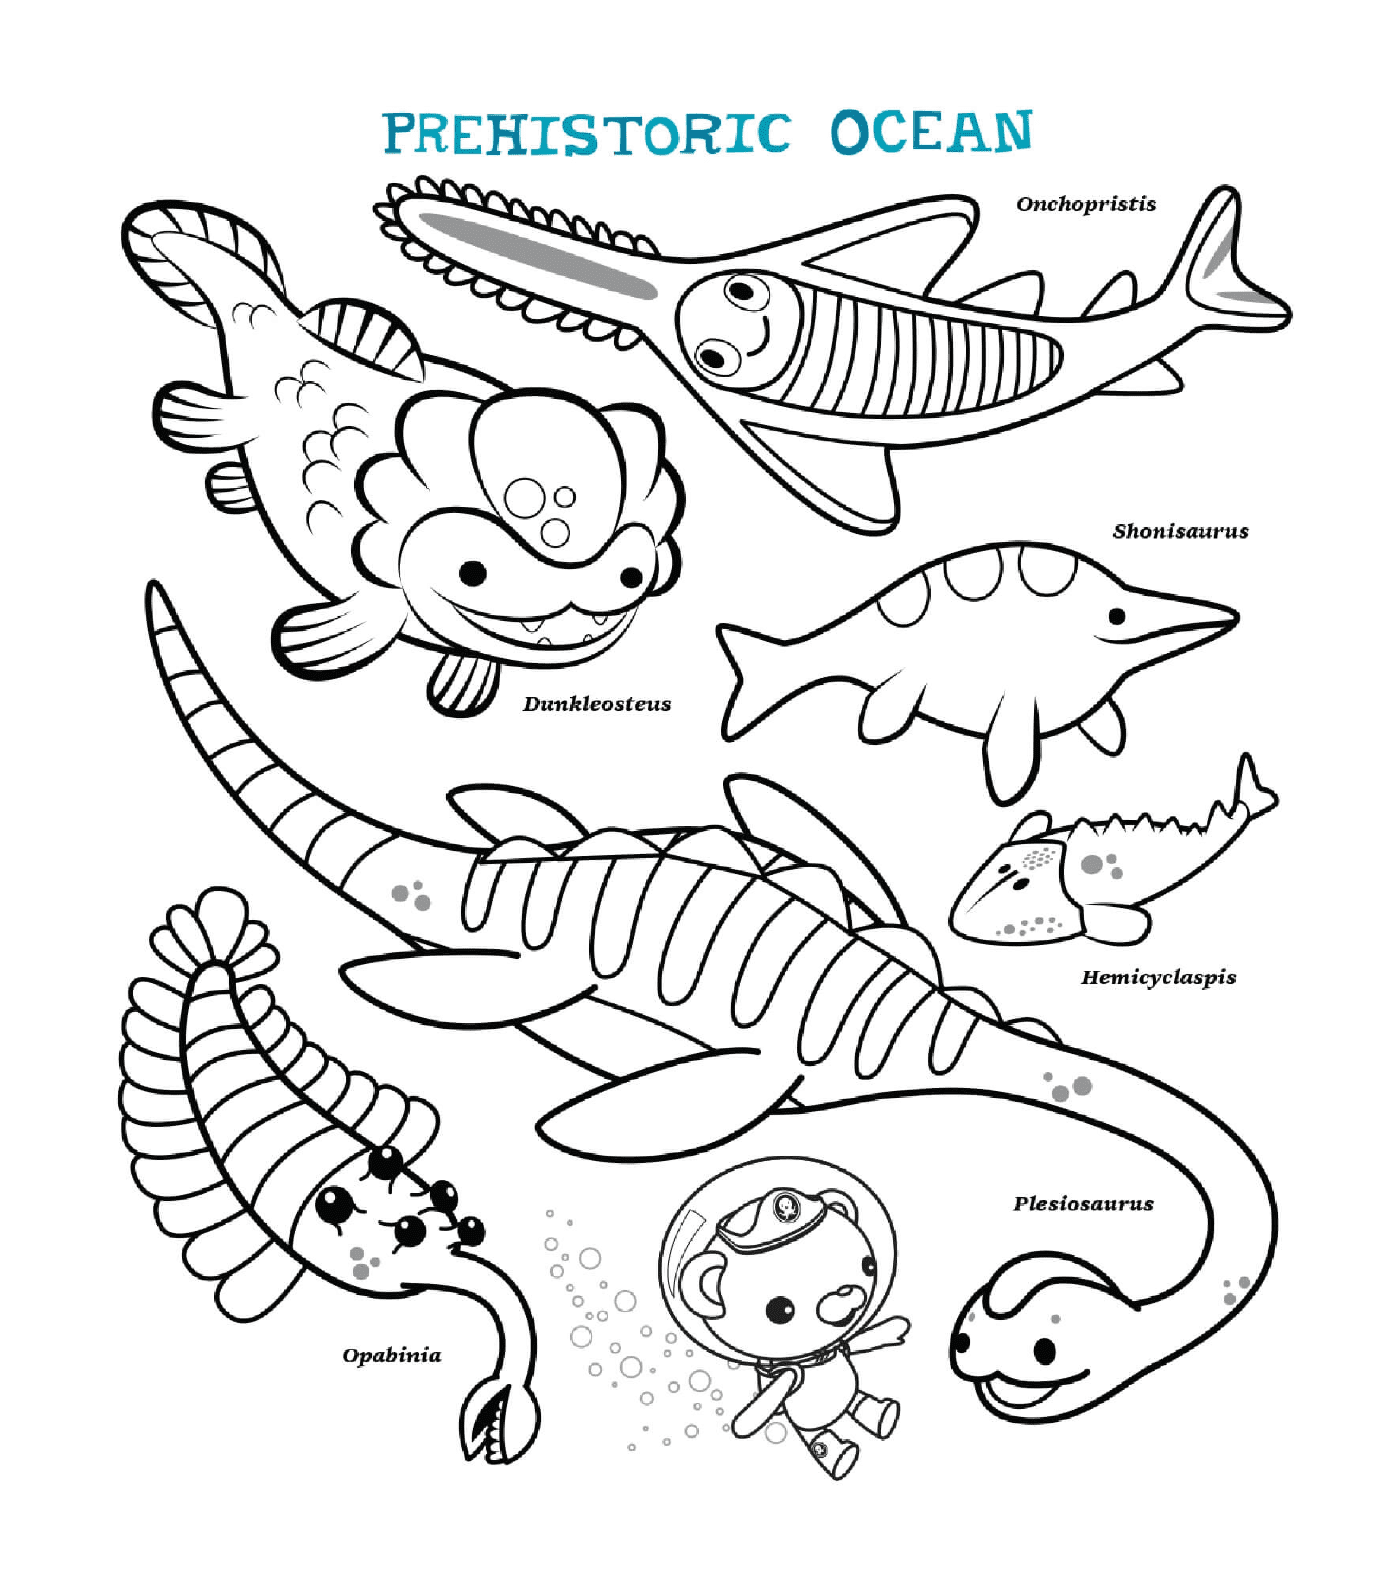  Prehistoric Ocean, a meeting with marine creatures 